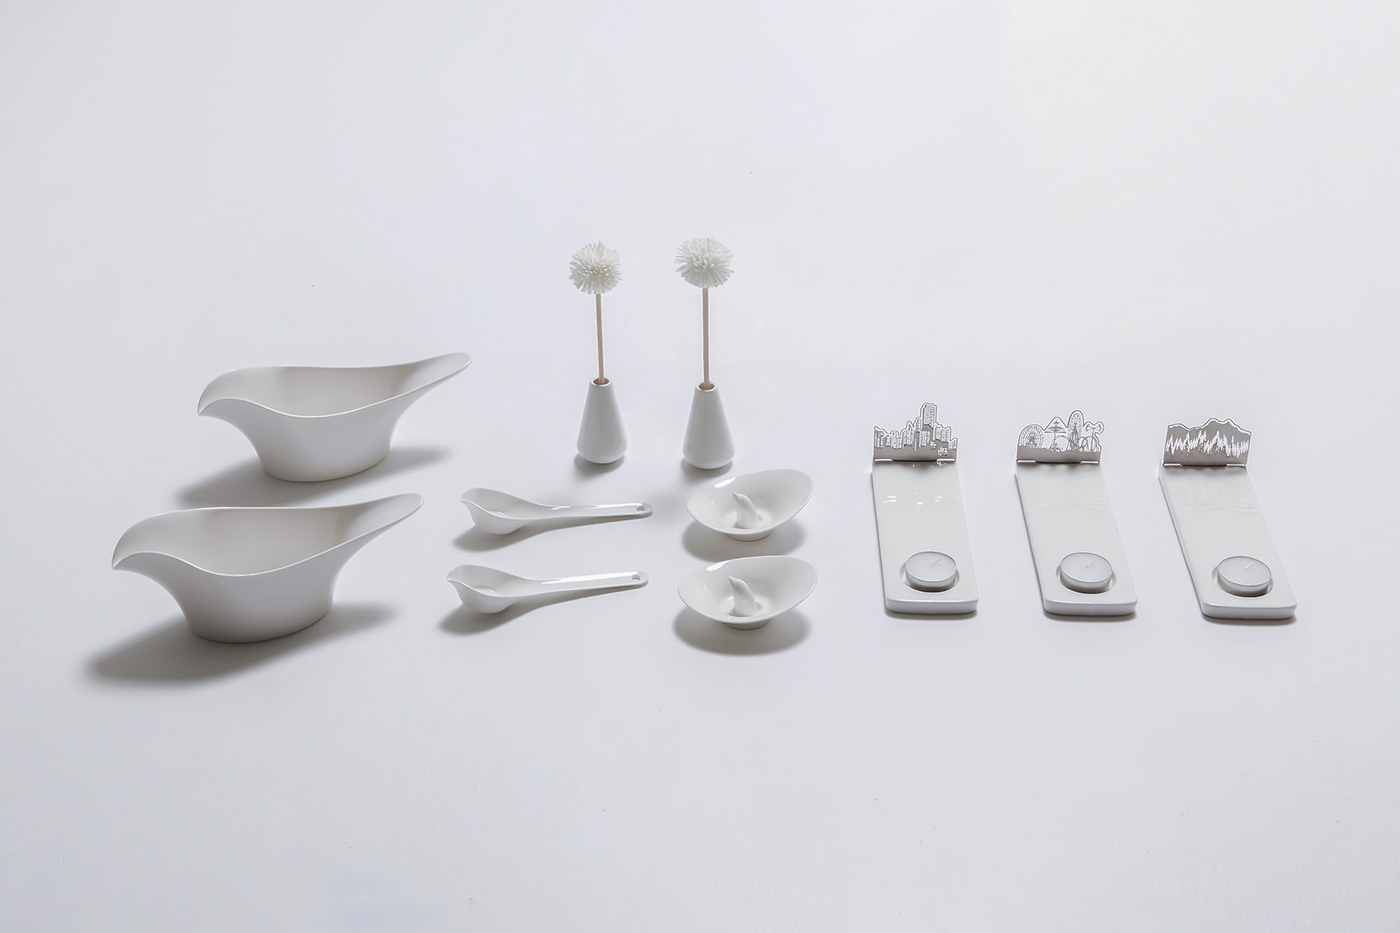 objet mood emotion ceramic handmade monochrome White inspiration living organic